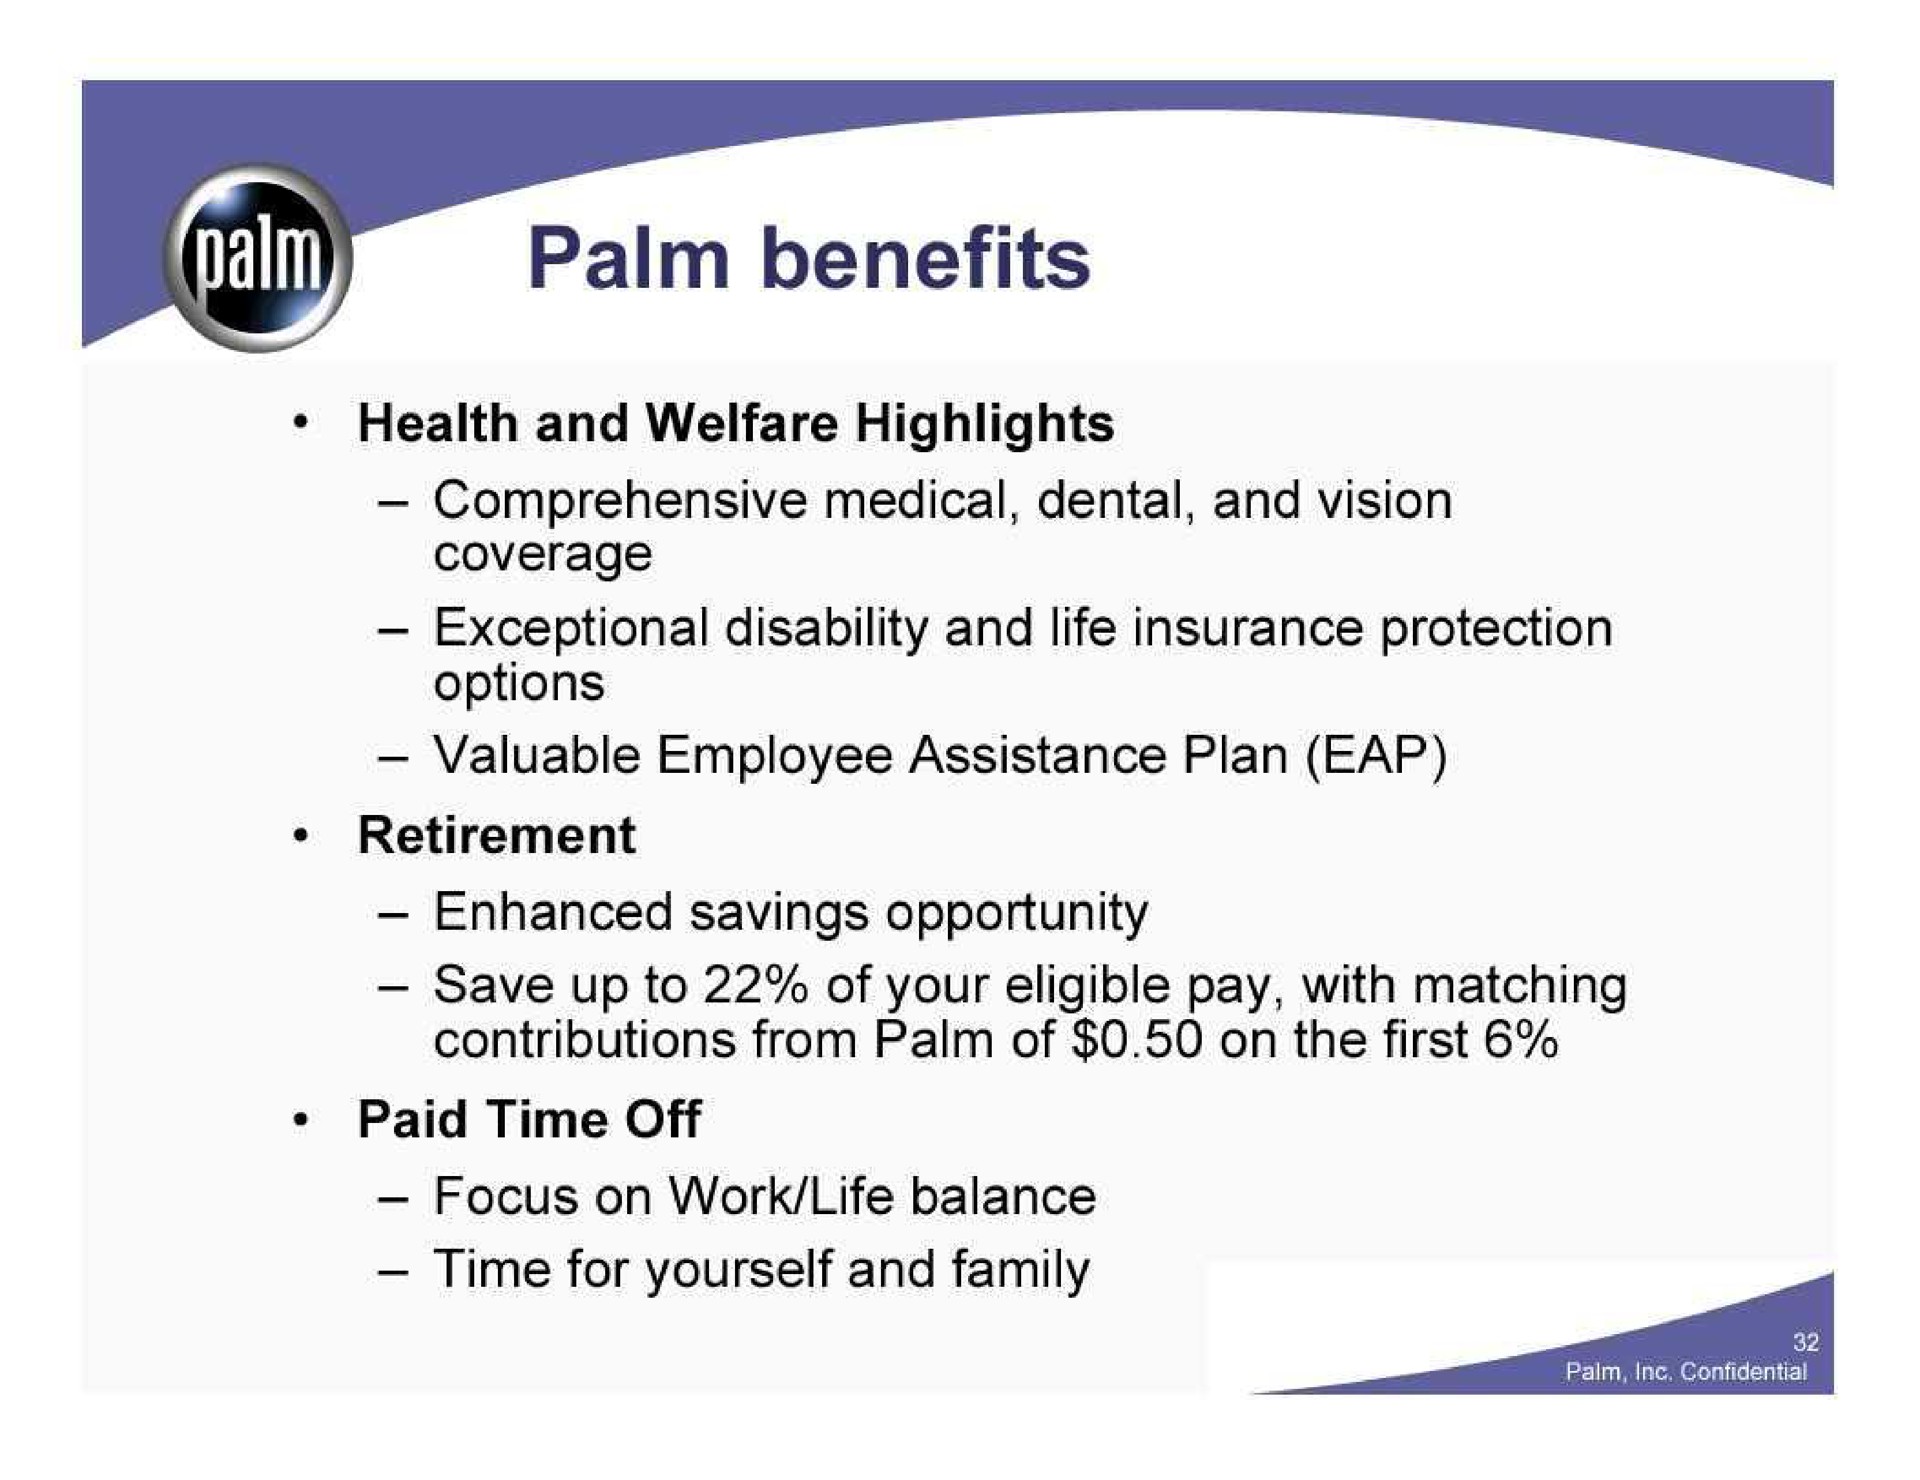 palm benefits | Palm Inc.